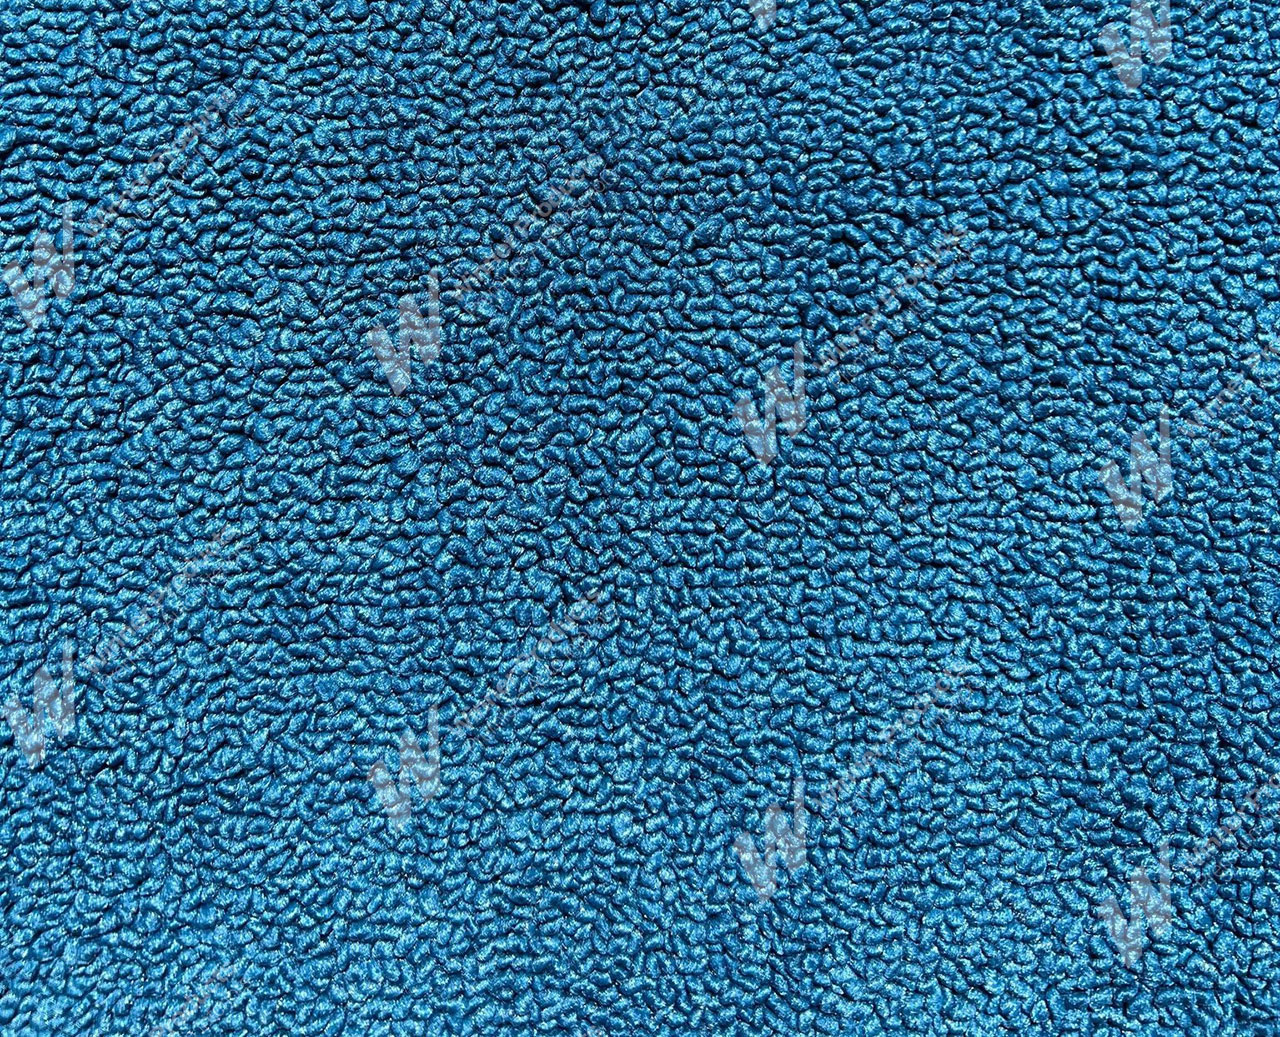 Holden Premier HT Premier Wagon 14T Twilight Blue & Castillion Weave Carpet (Image 1 of 1)